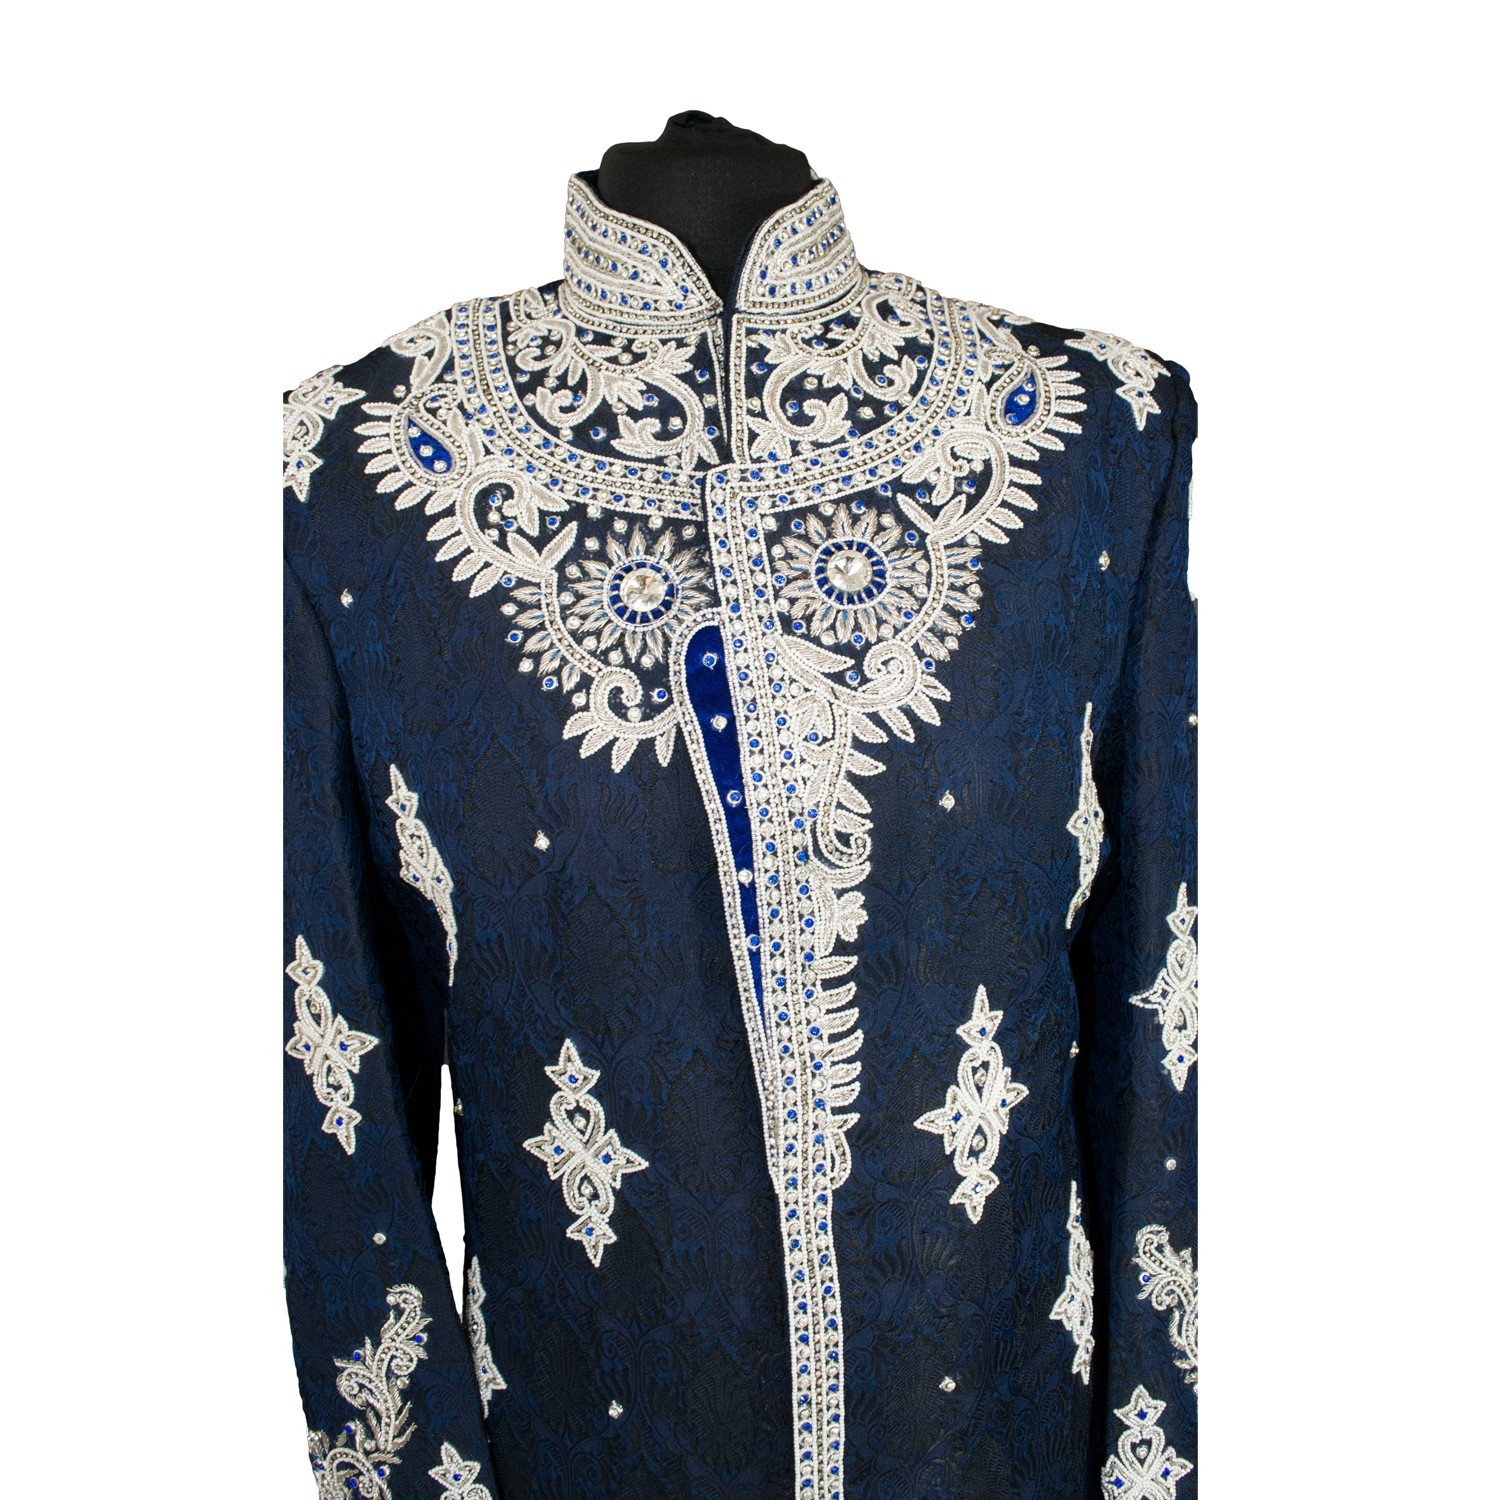 Indian Men's Elegant Classic Nevy Blue Sherwani Wedding Outfit. Size XL - GR16